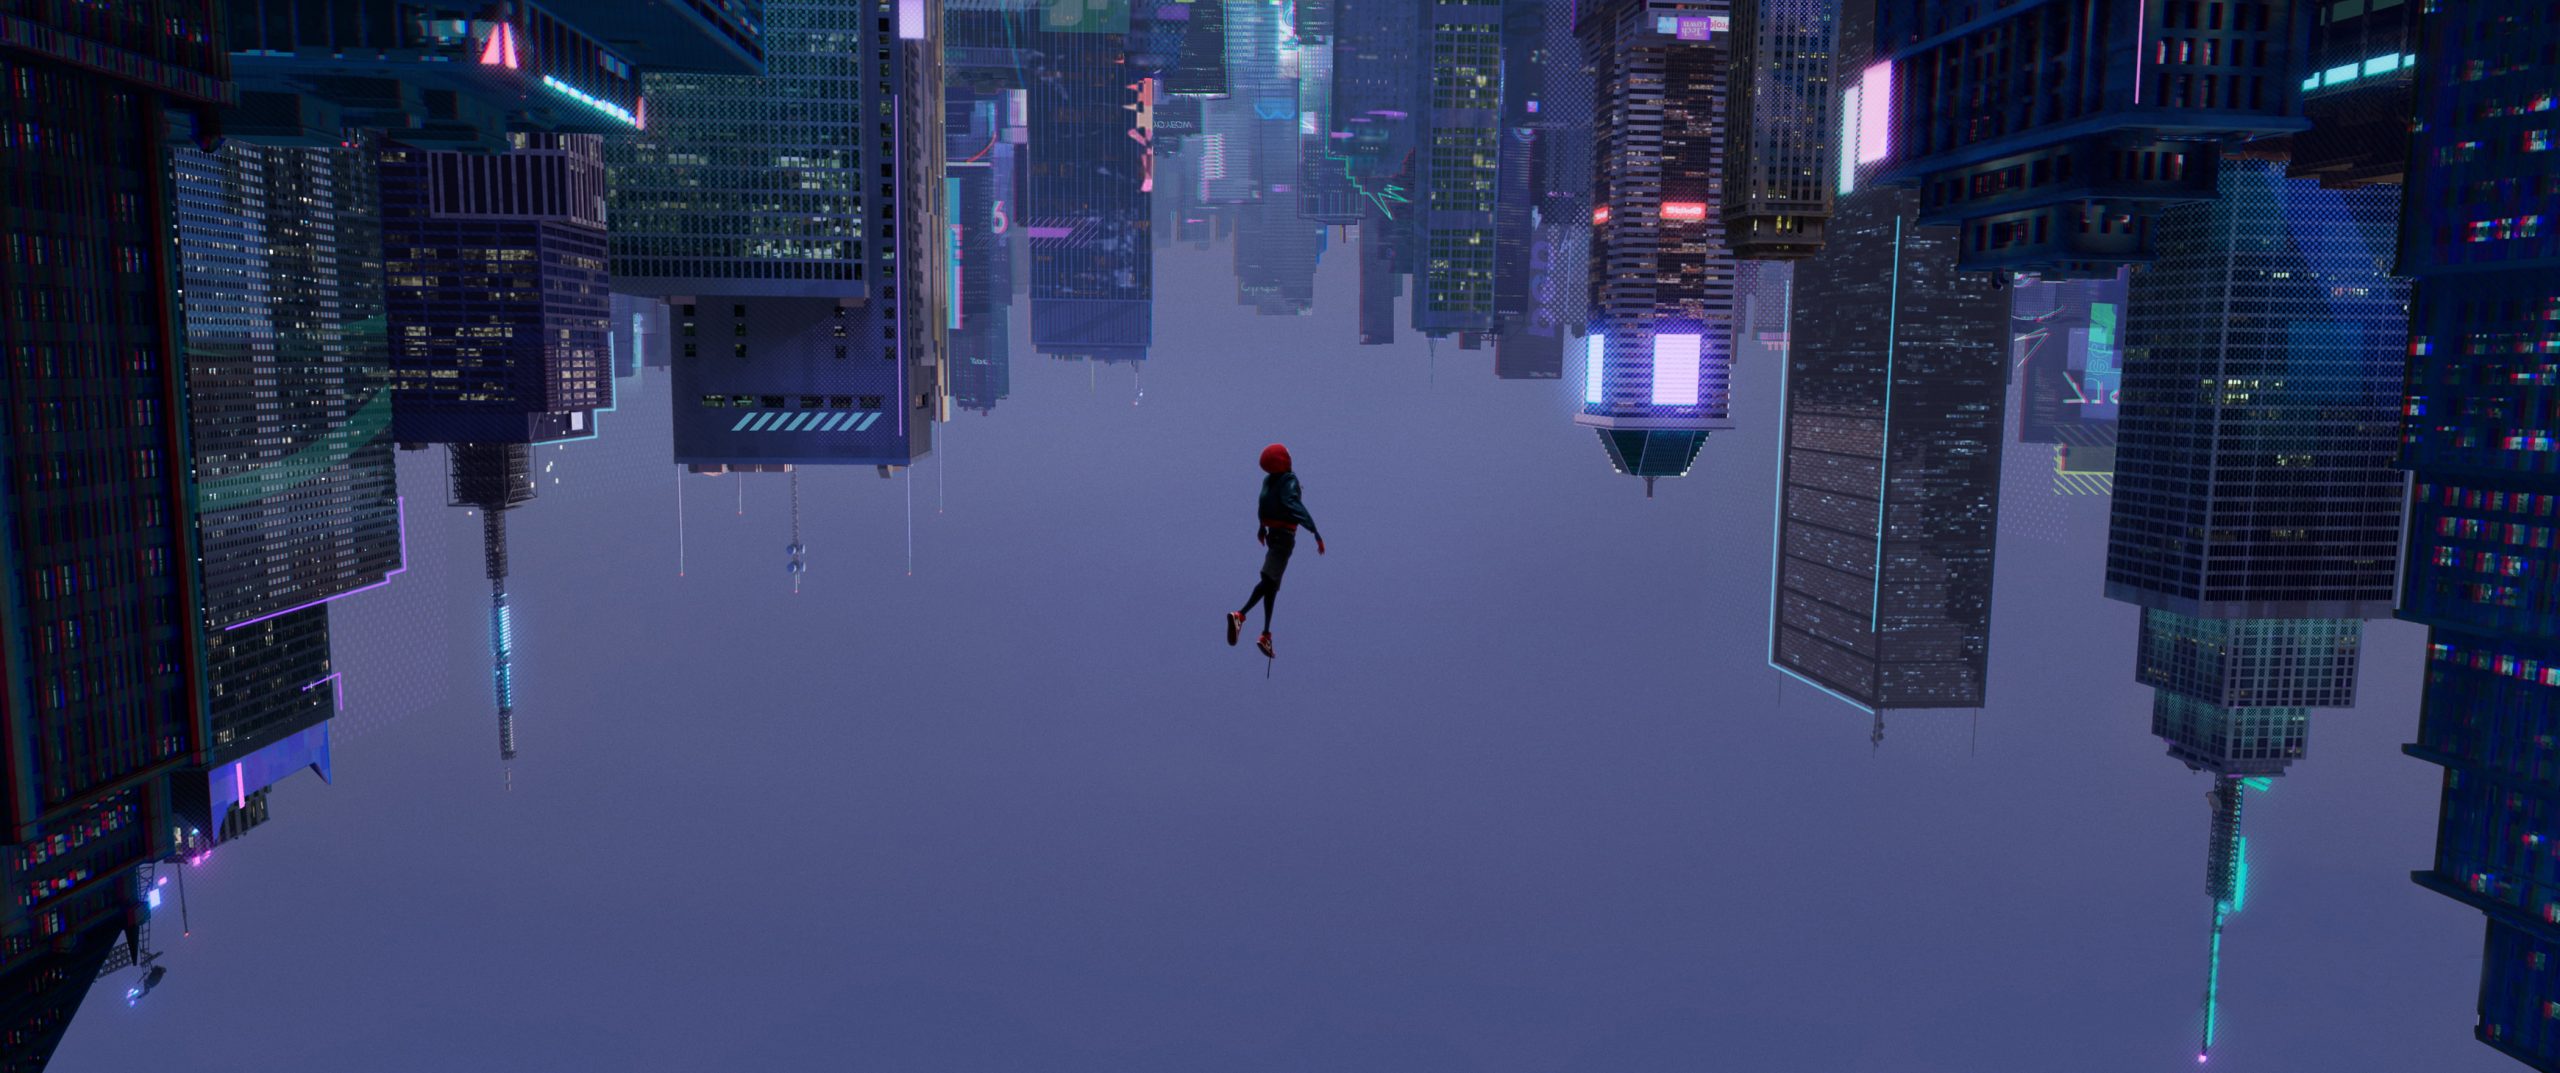 cyberpunk skyscraper upside down animated movies Spider-Man wallpaper